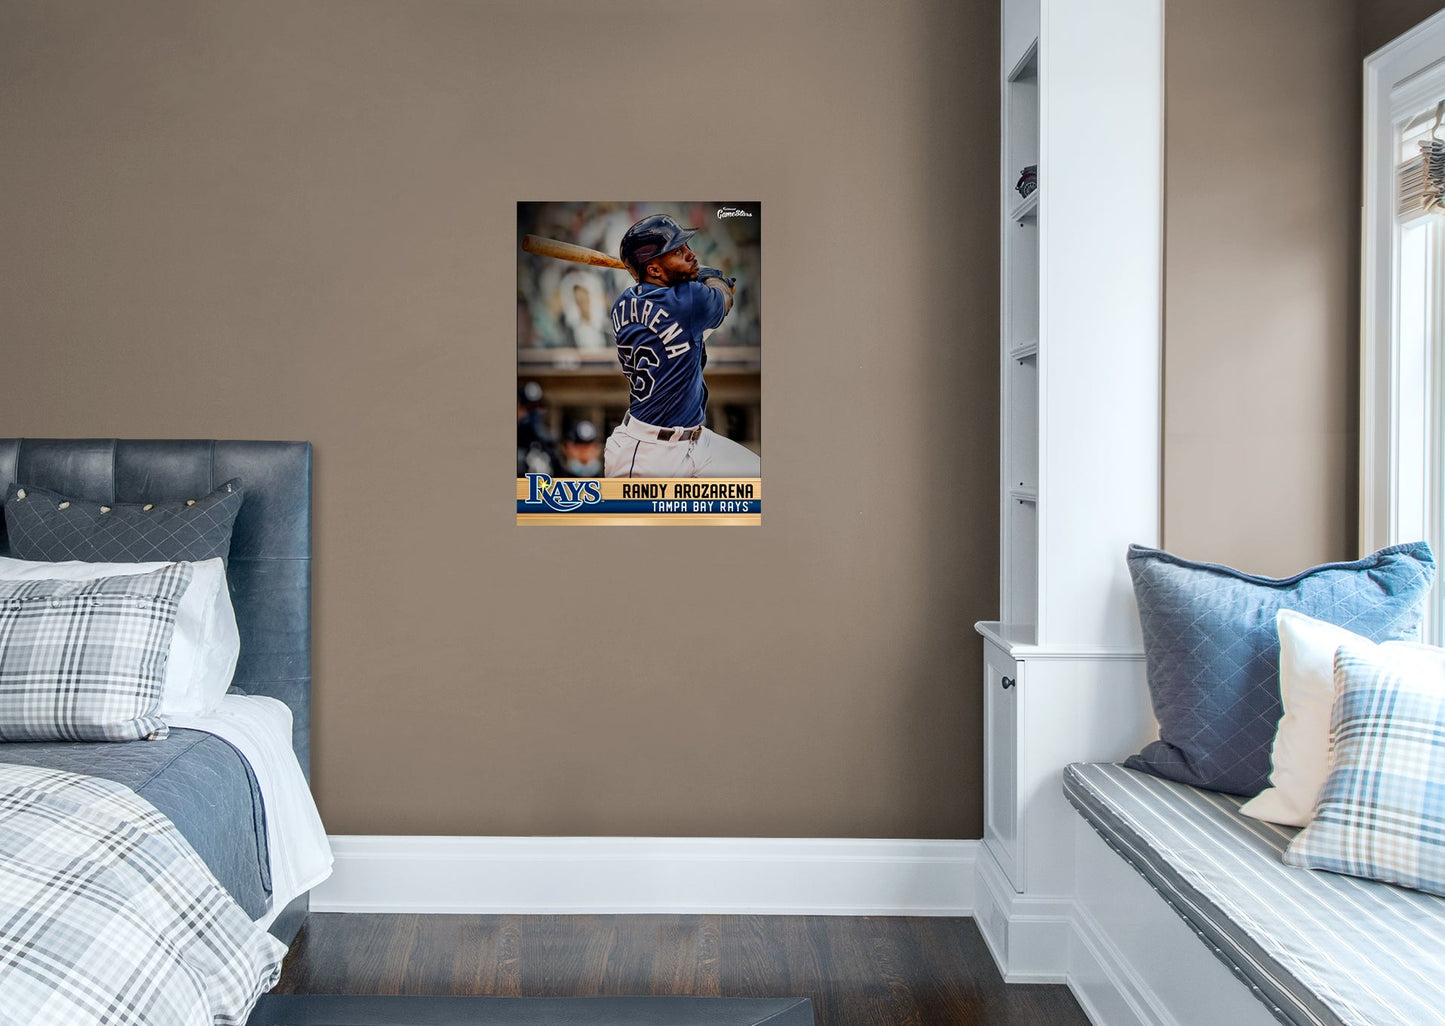 Tampa Bay Rays: Randy Arozarena  GameStar        - Officially Licensed MLB Removable Wall   Adhesive Decal